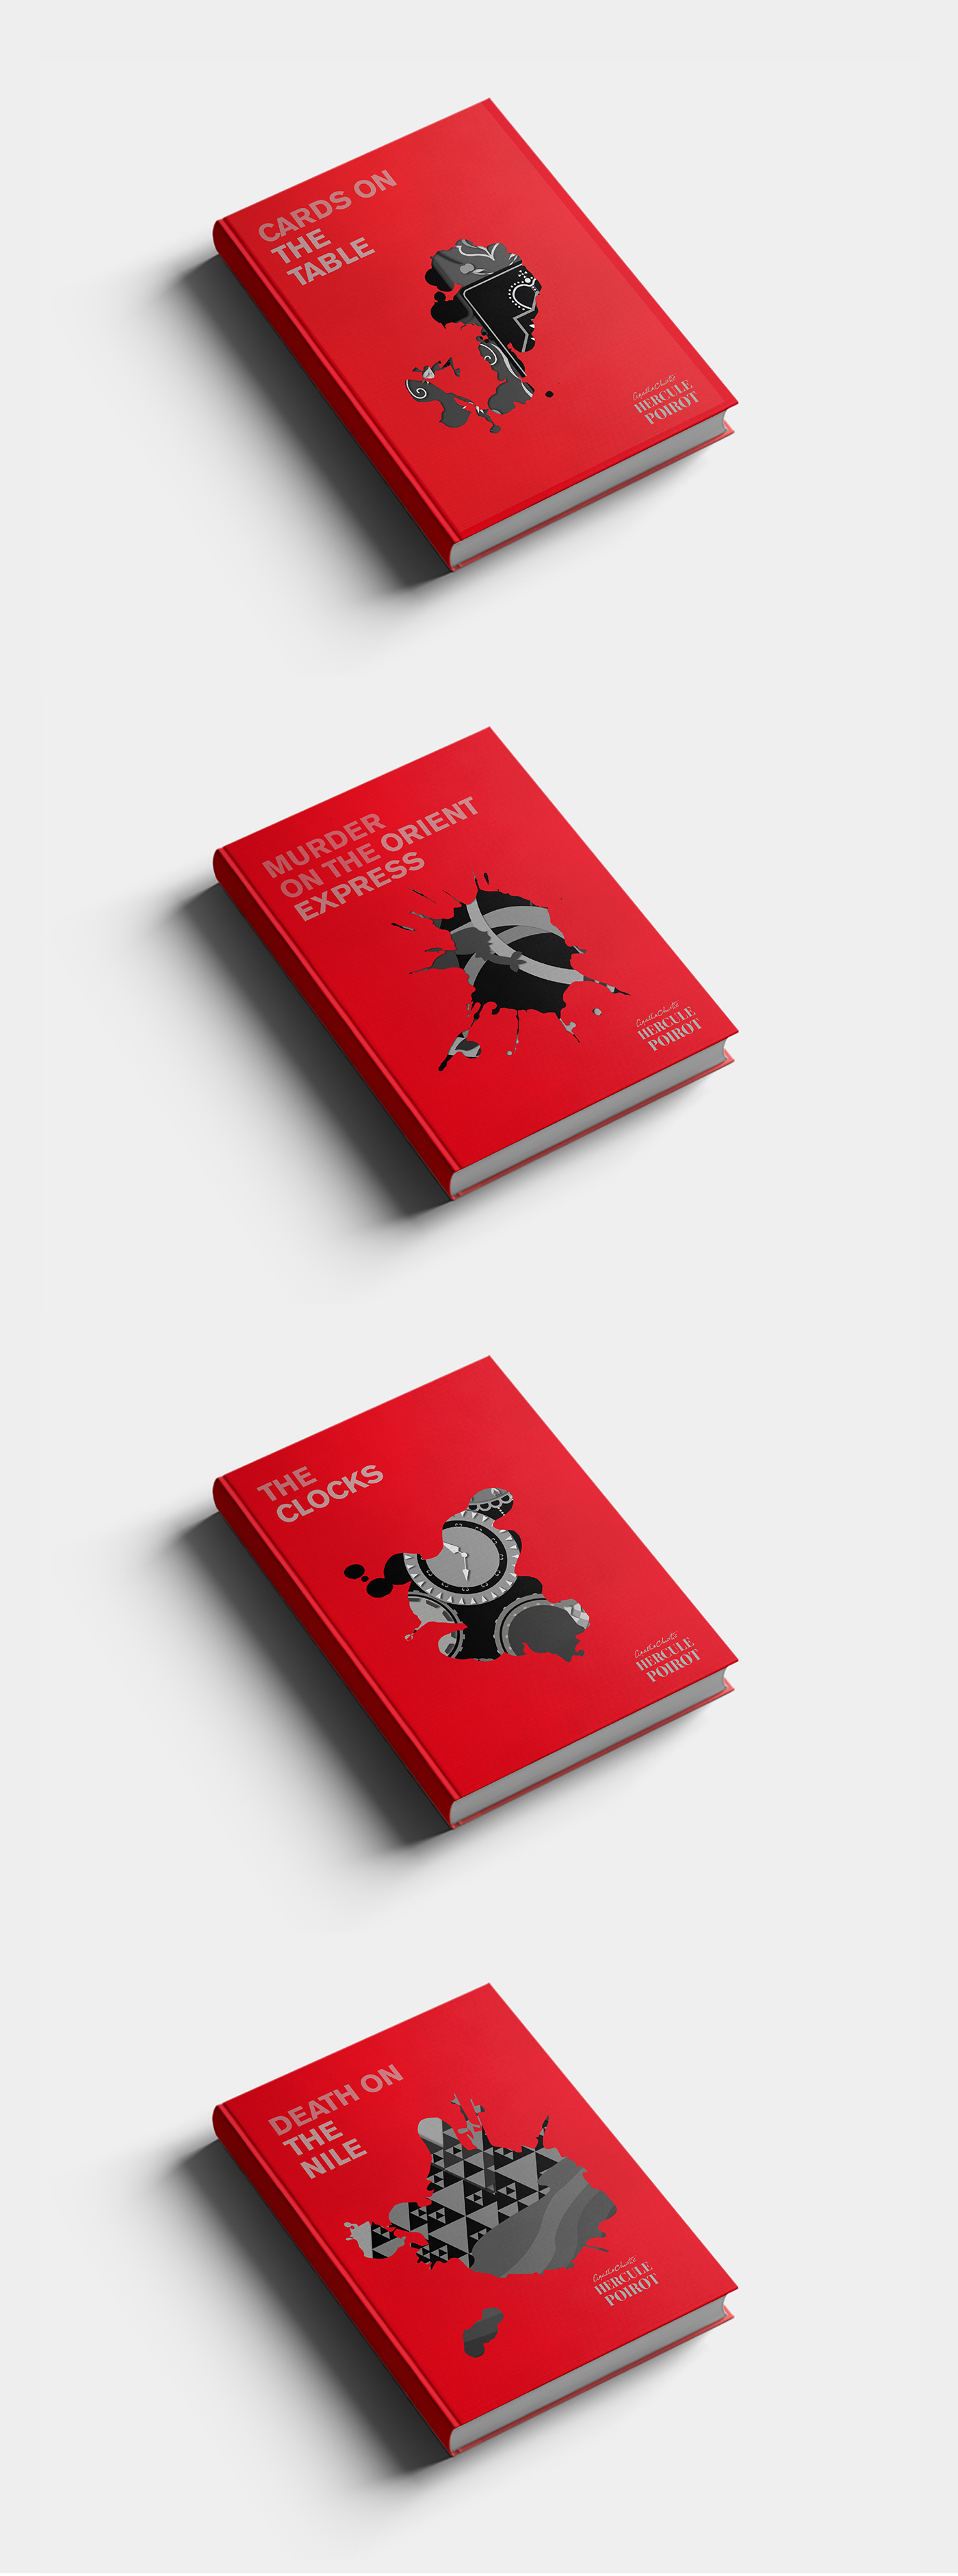 Book Cover Design agatha christie hercule poirot